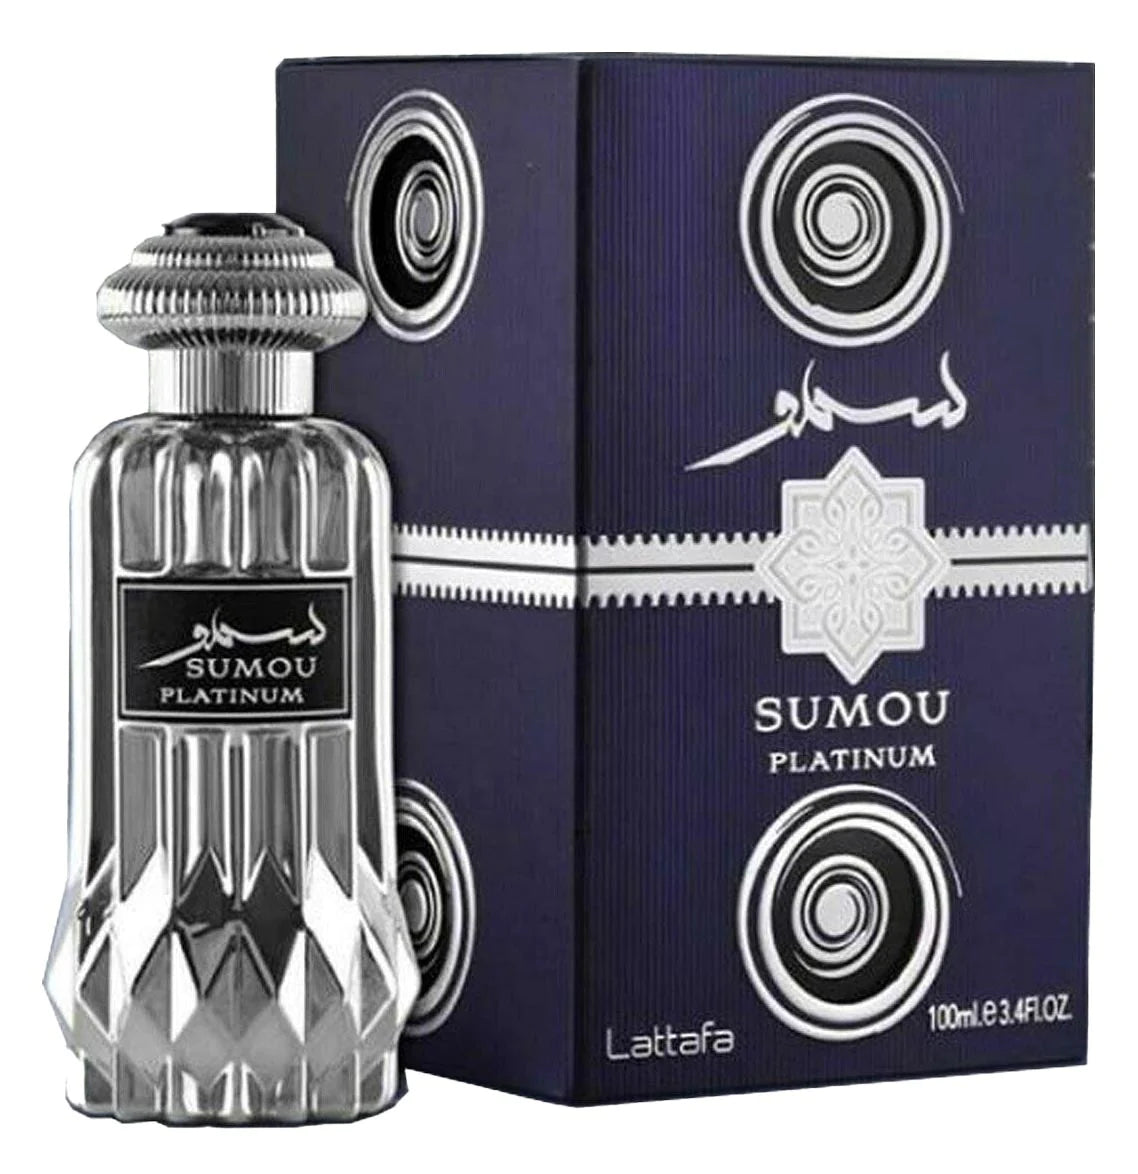 Sumou Platinum EDP (100ml) perfume spray by Lattafa | Khan El Khalili